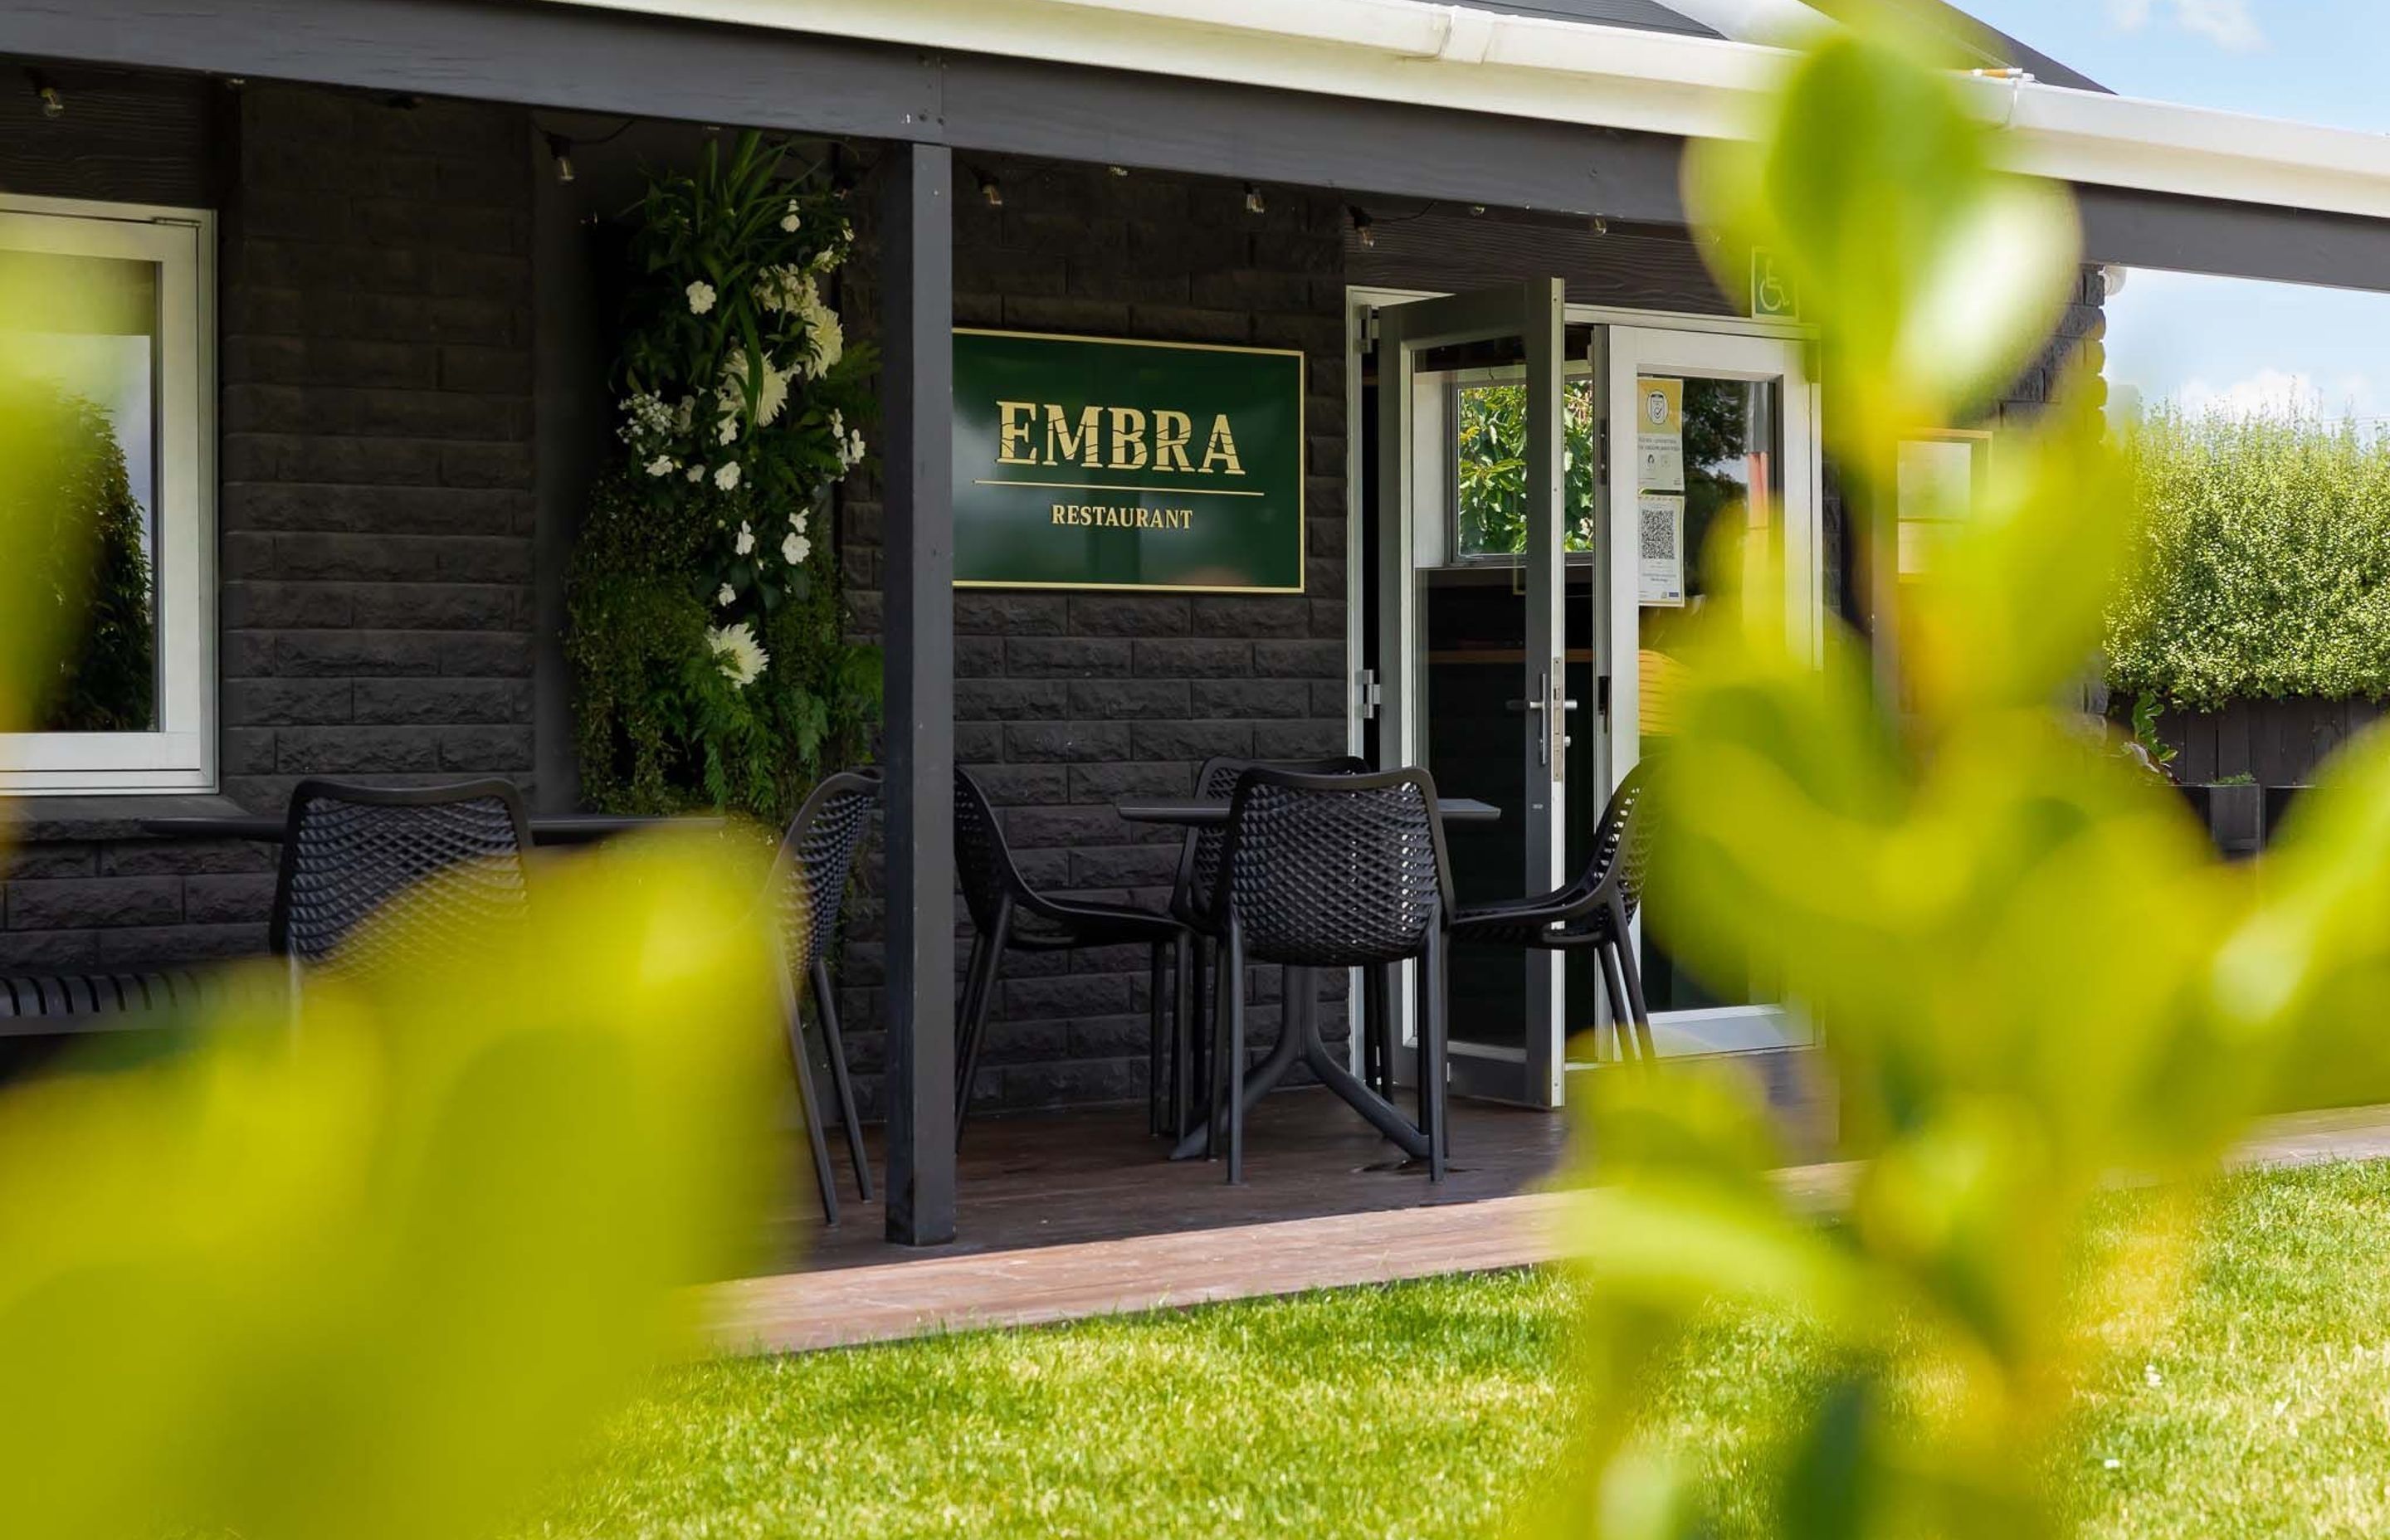 Embra Restaurant